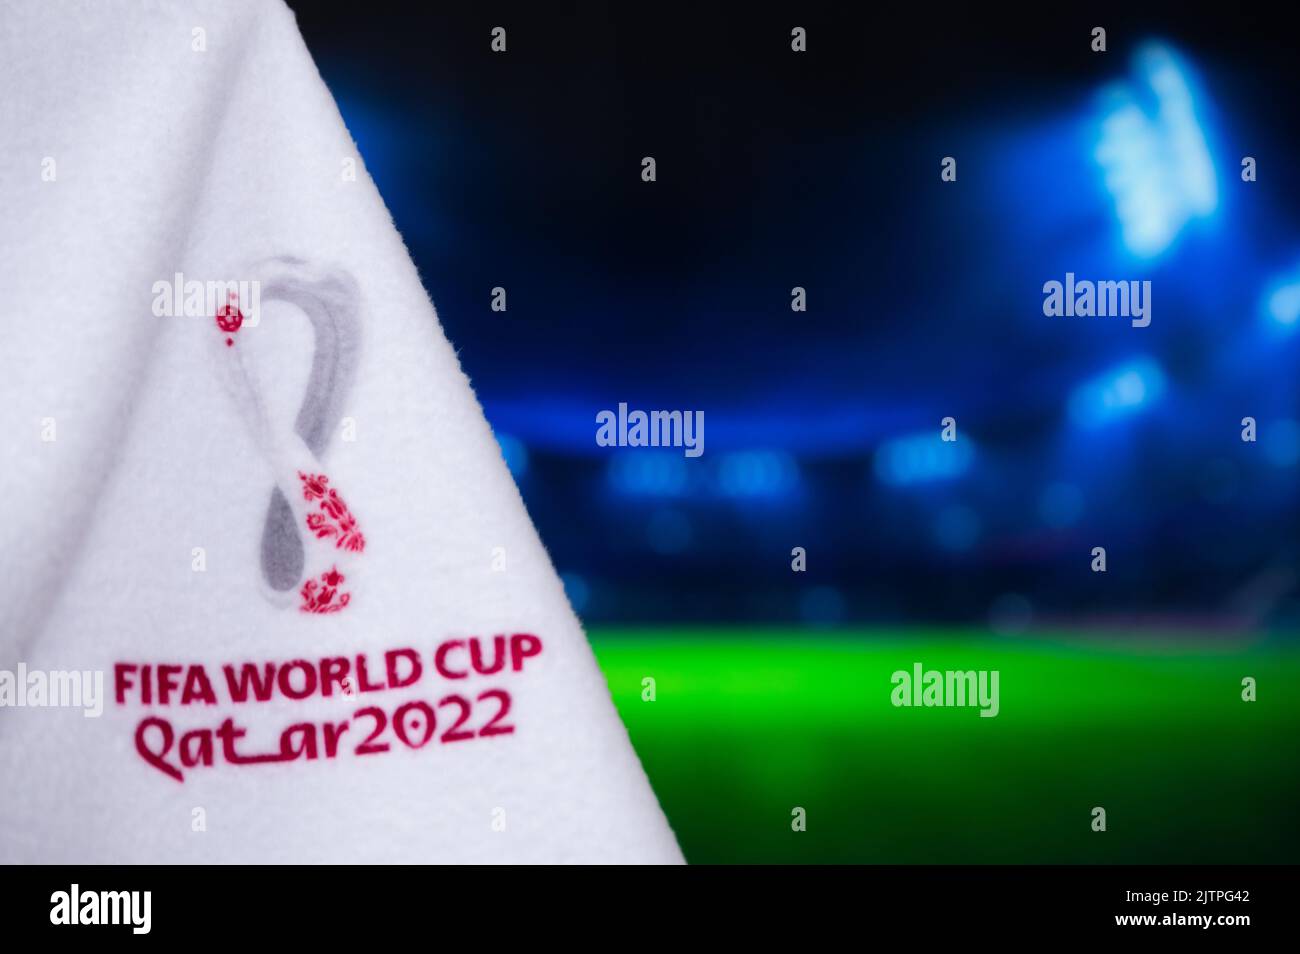 DOHA, QATAR, AUGUST 30, 2022: Fifa world Cup 2022 in Qatar. Football World Championship official logo on white blanket. Dark Soccer Stadium in backgro Stock Photo